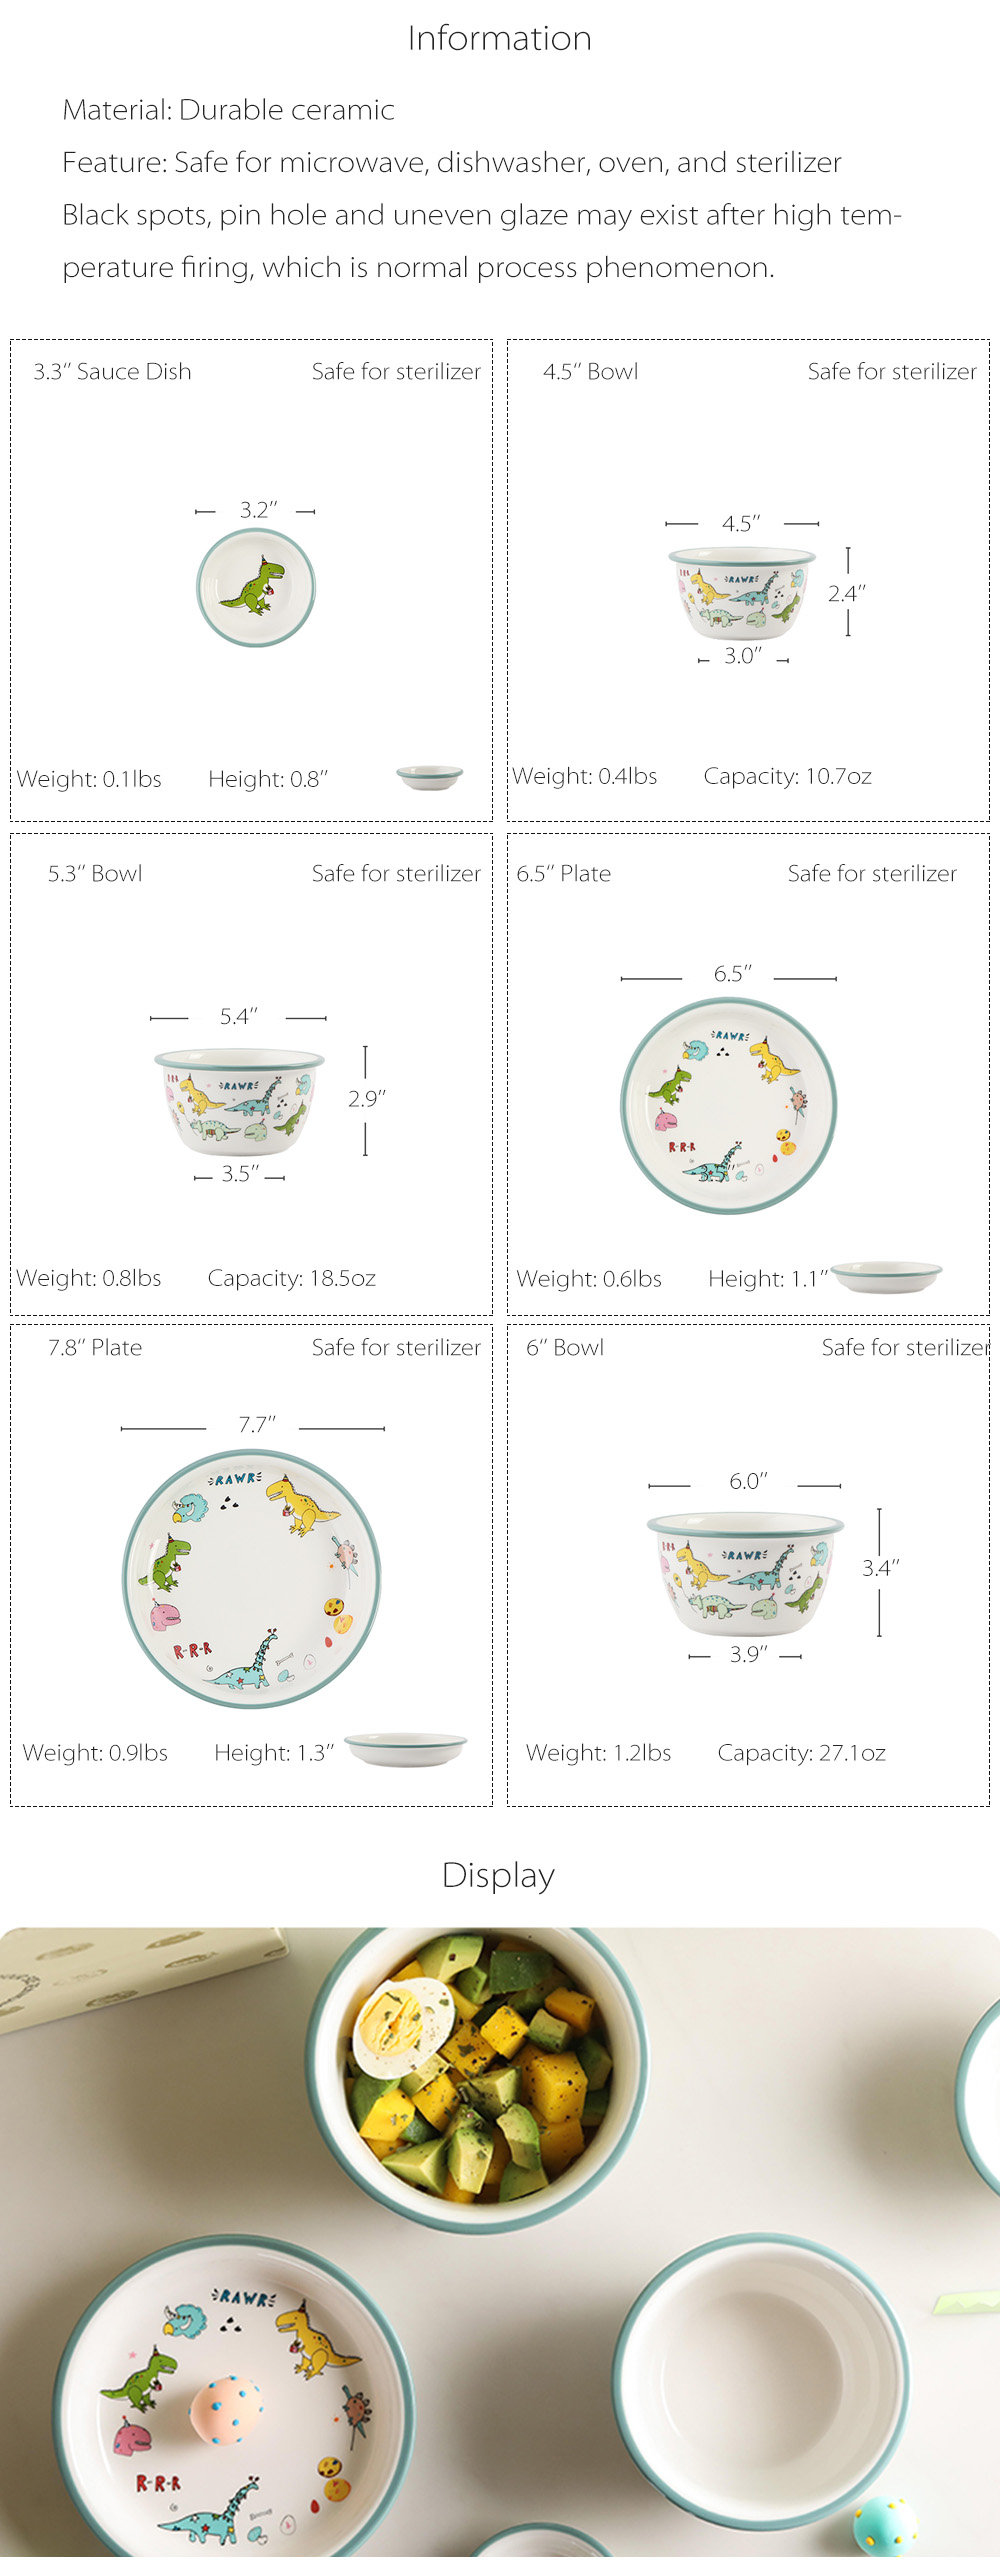 Details about   Japan Dinosaur Porcelain Plate Ceramic Dinner Plate For Kids Gift Size 5 03300 